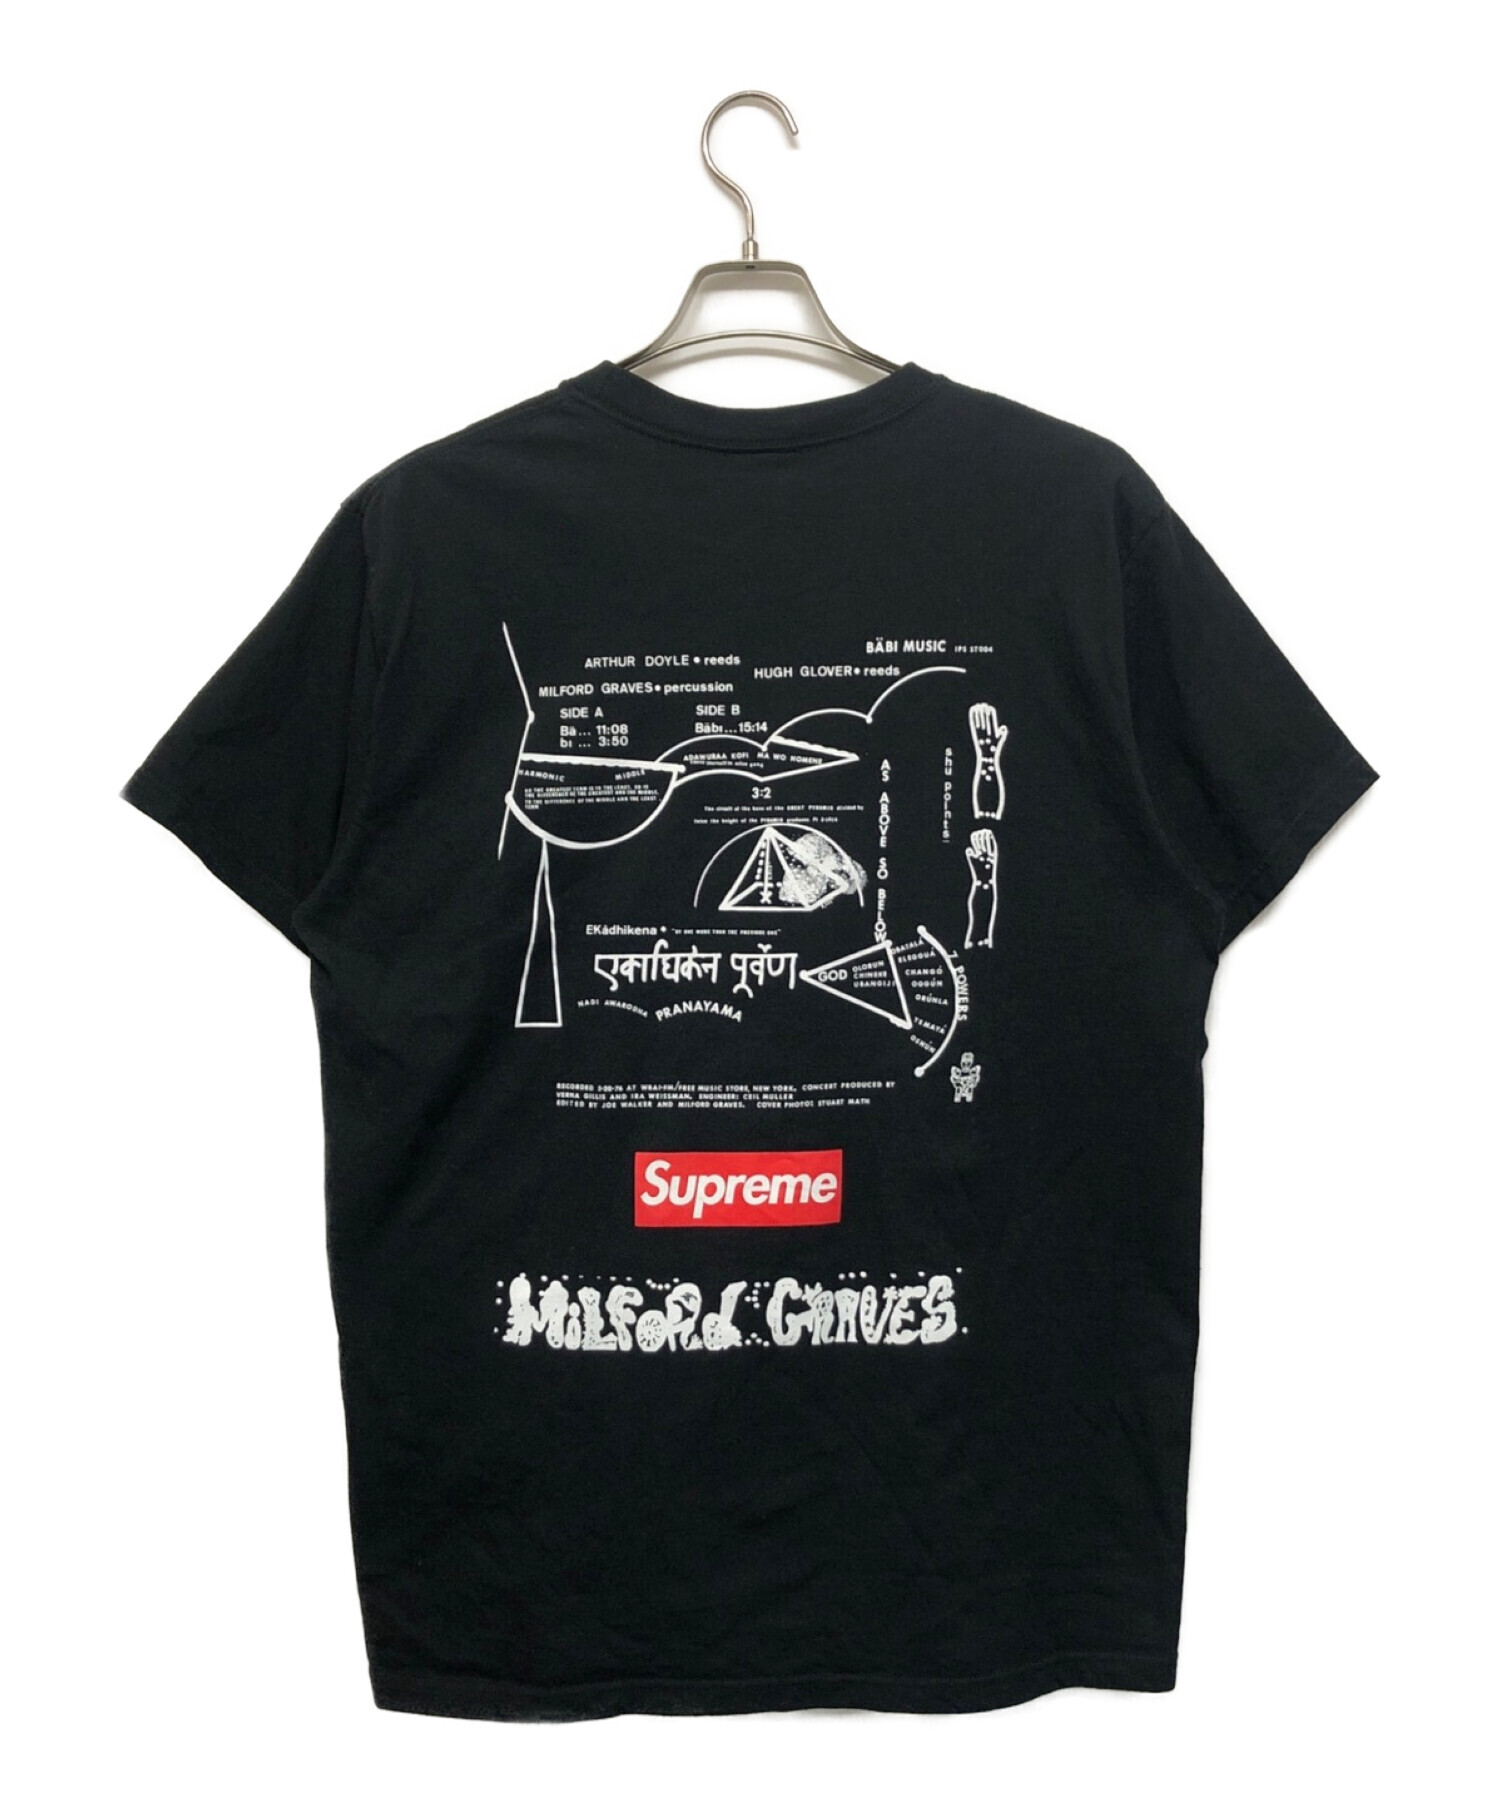 Tシャツ/カットソー(半袖/袖なし)シュプリーム Supreme Milford Graves Tee